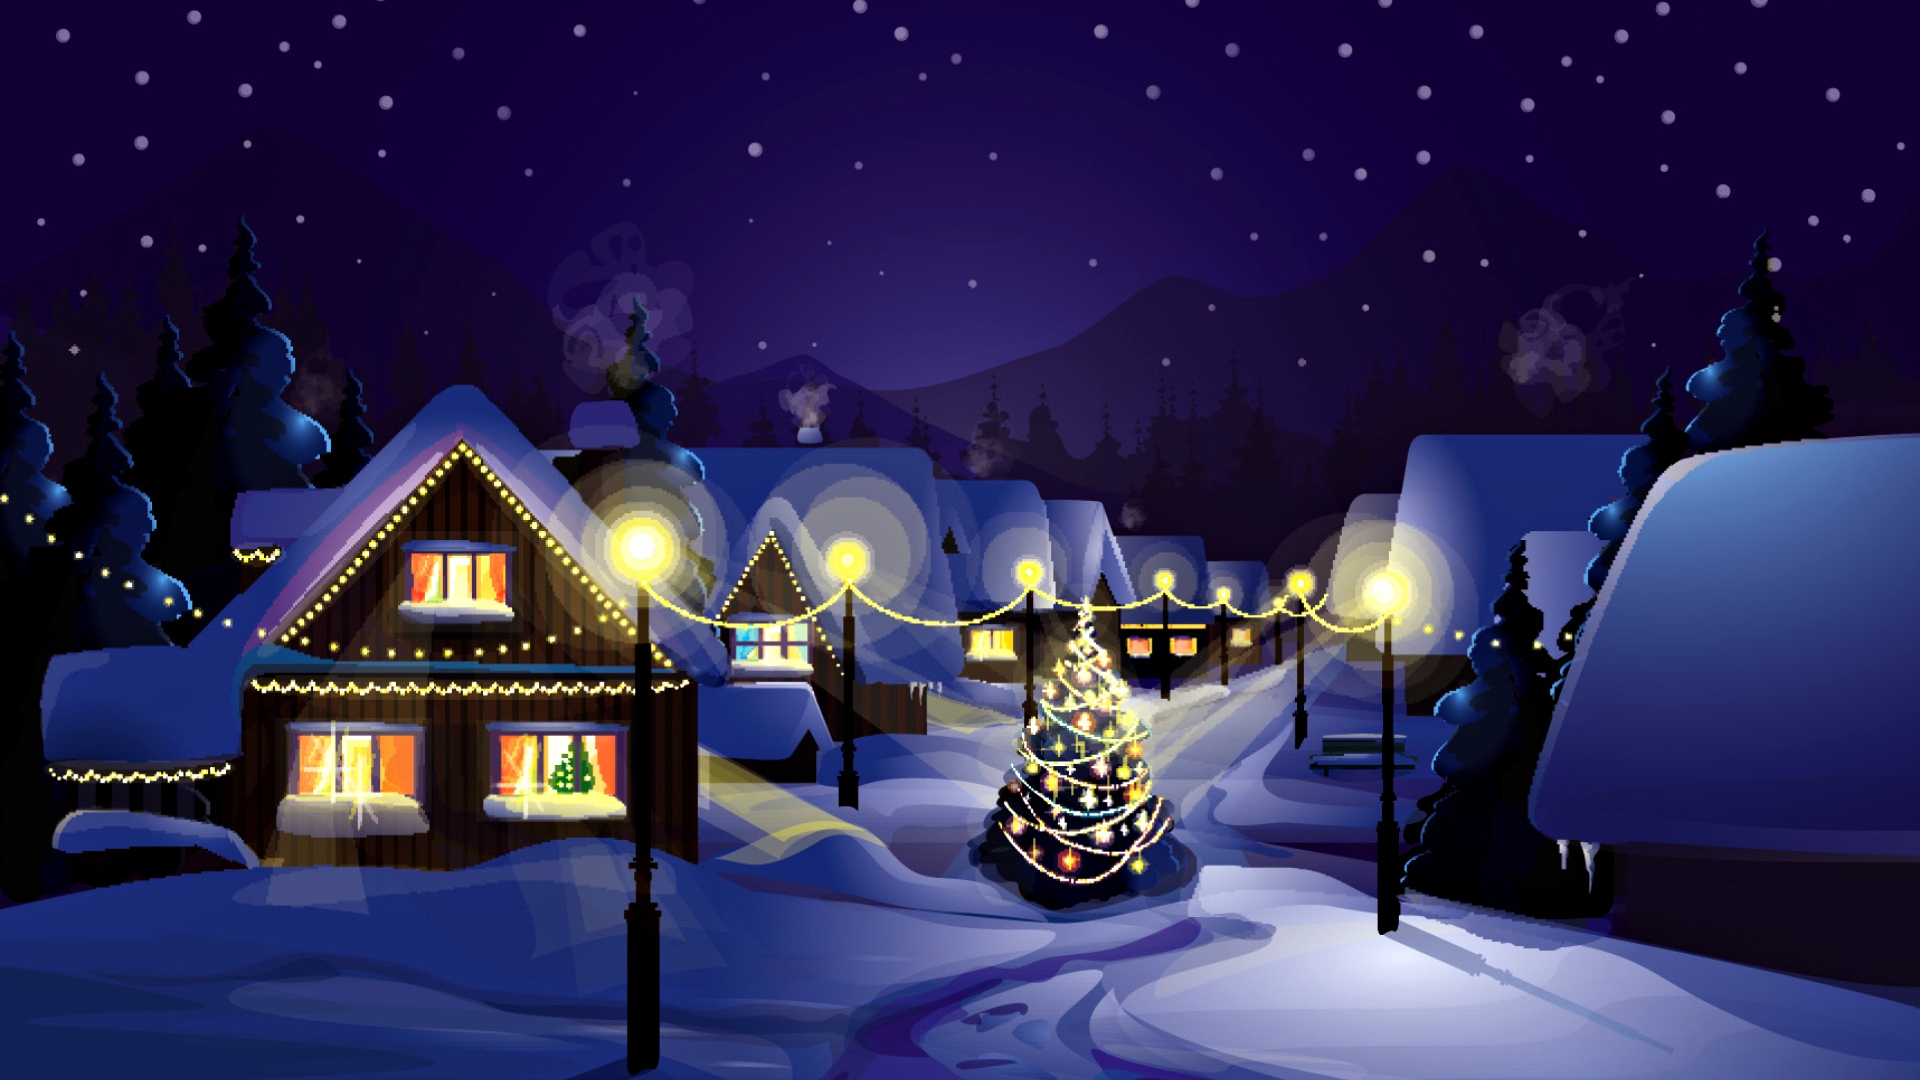 Christmas Village for 1920 x 1080 HDTV 1080p resolution